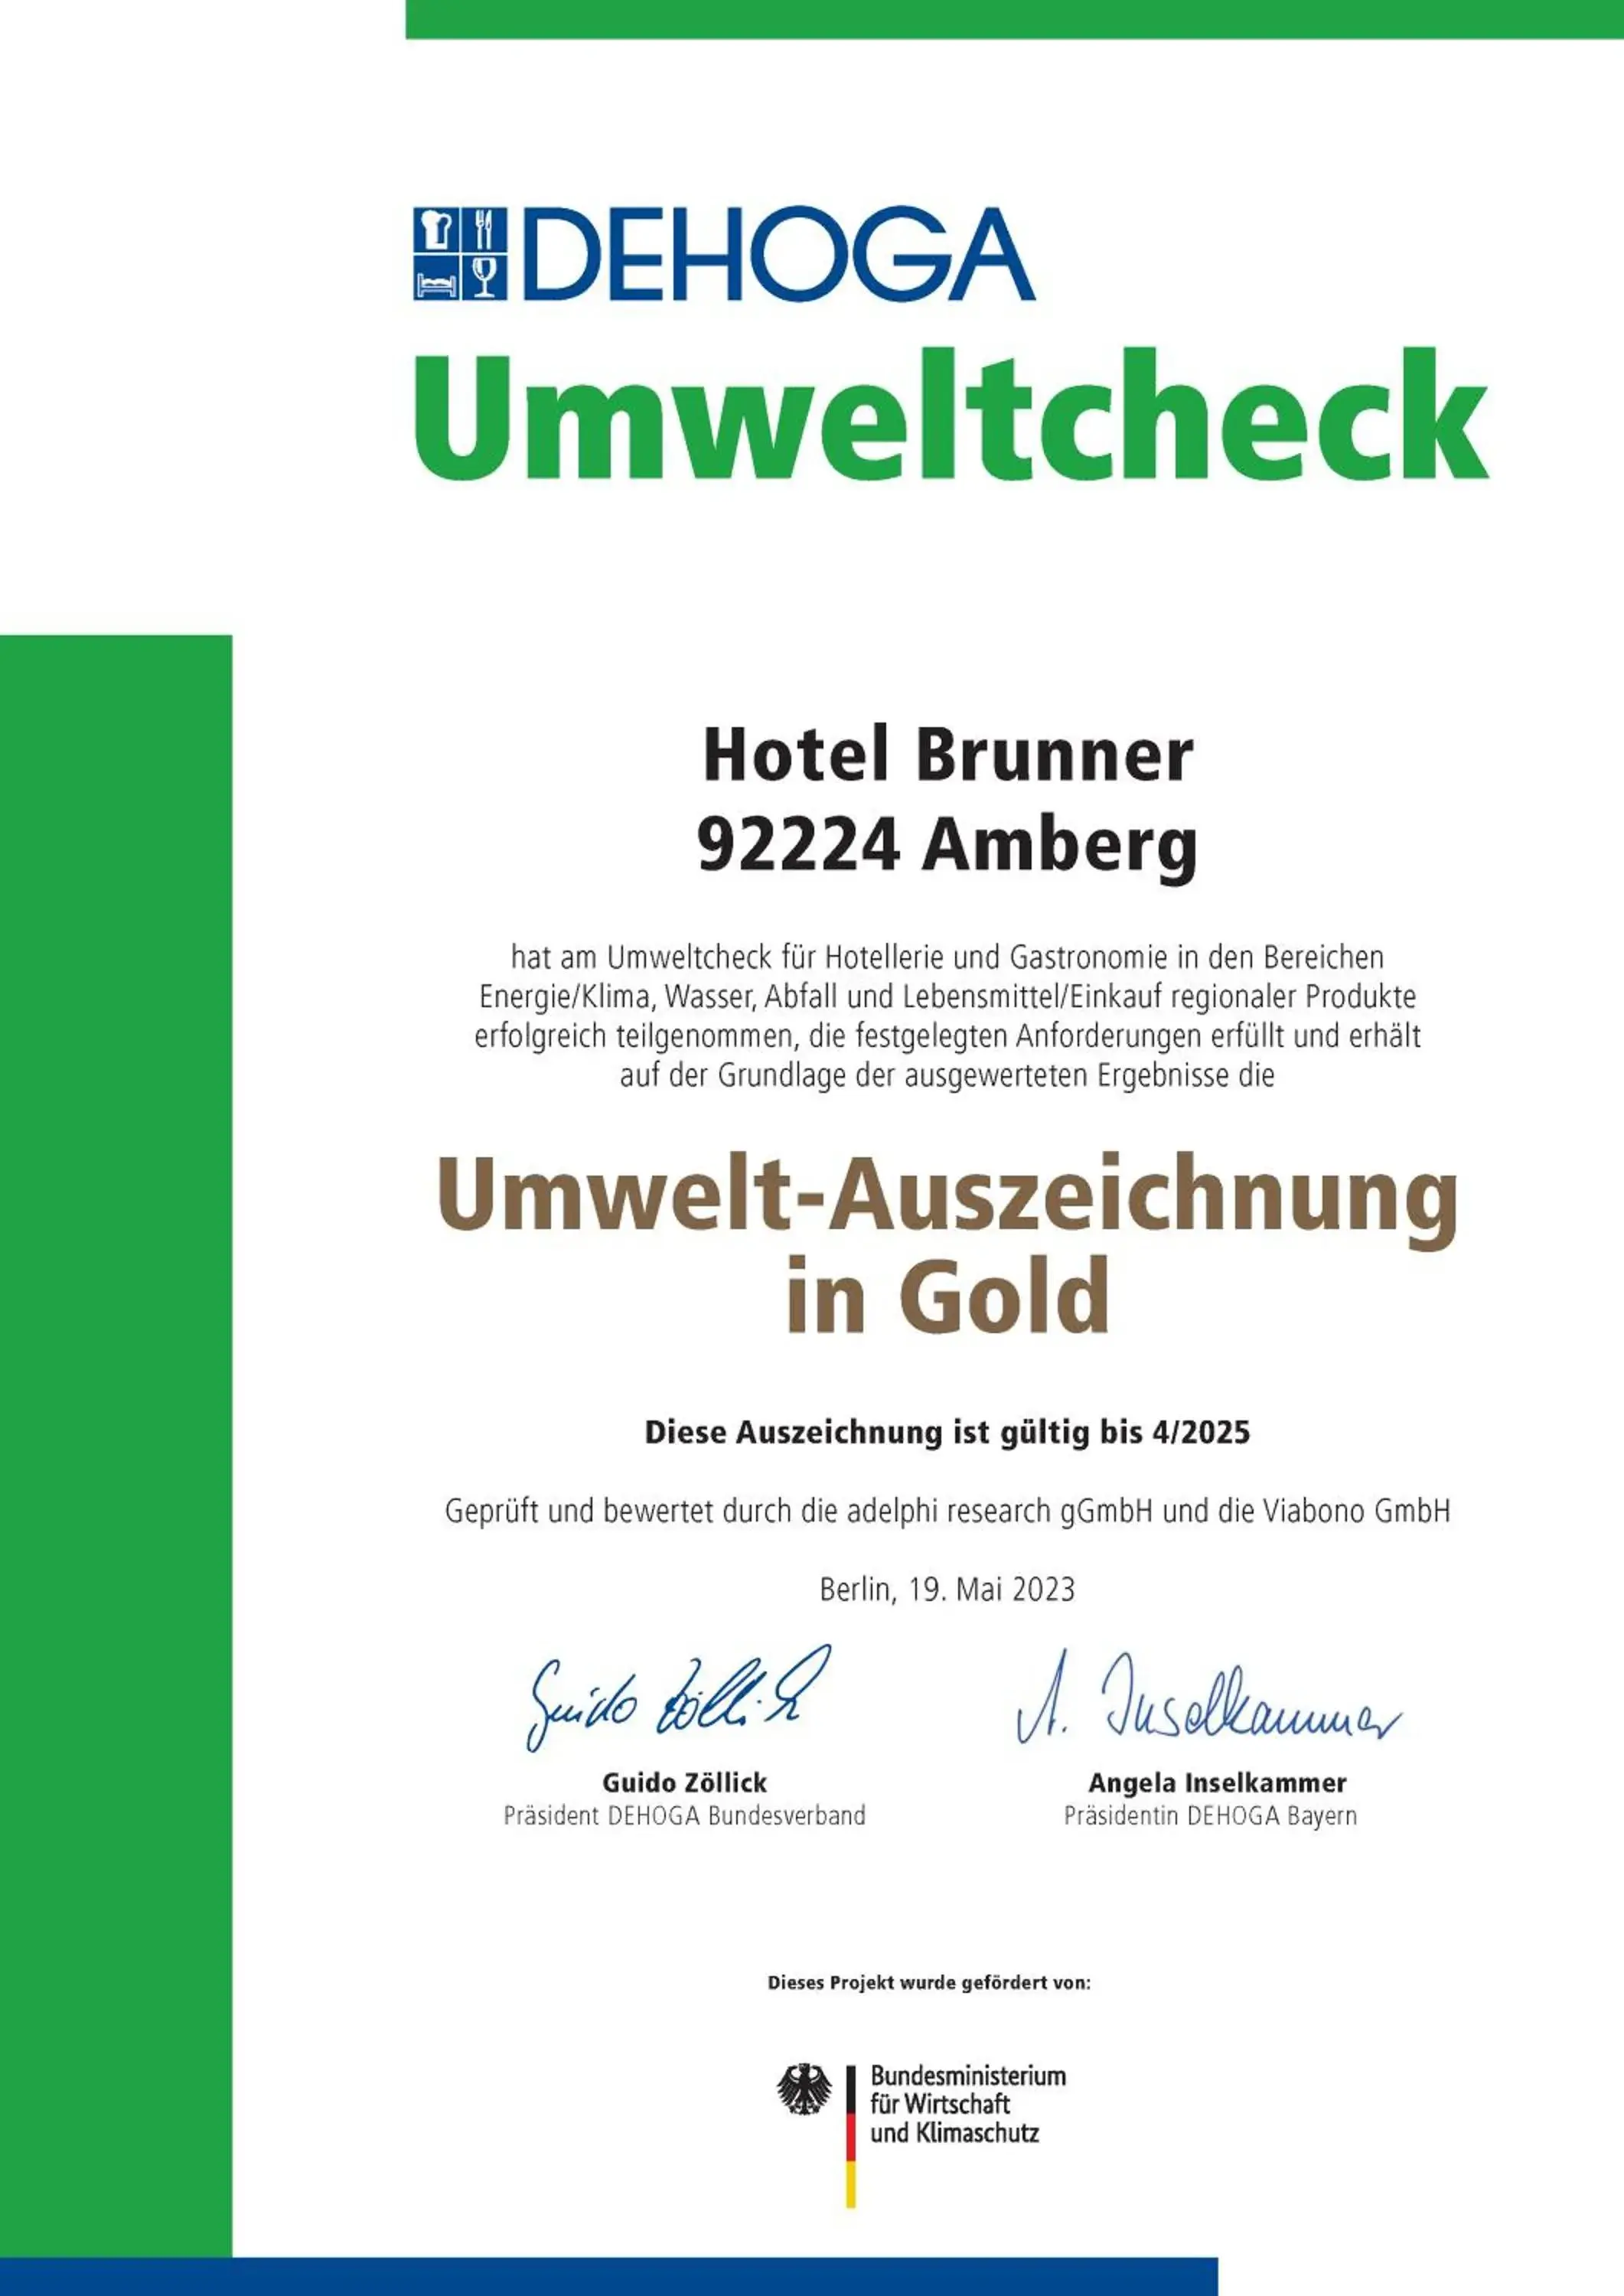 Certificate/Award in Hotel Brunner